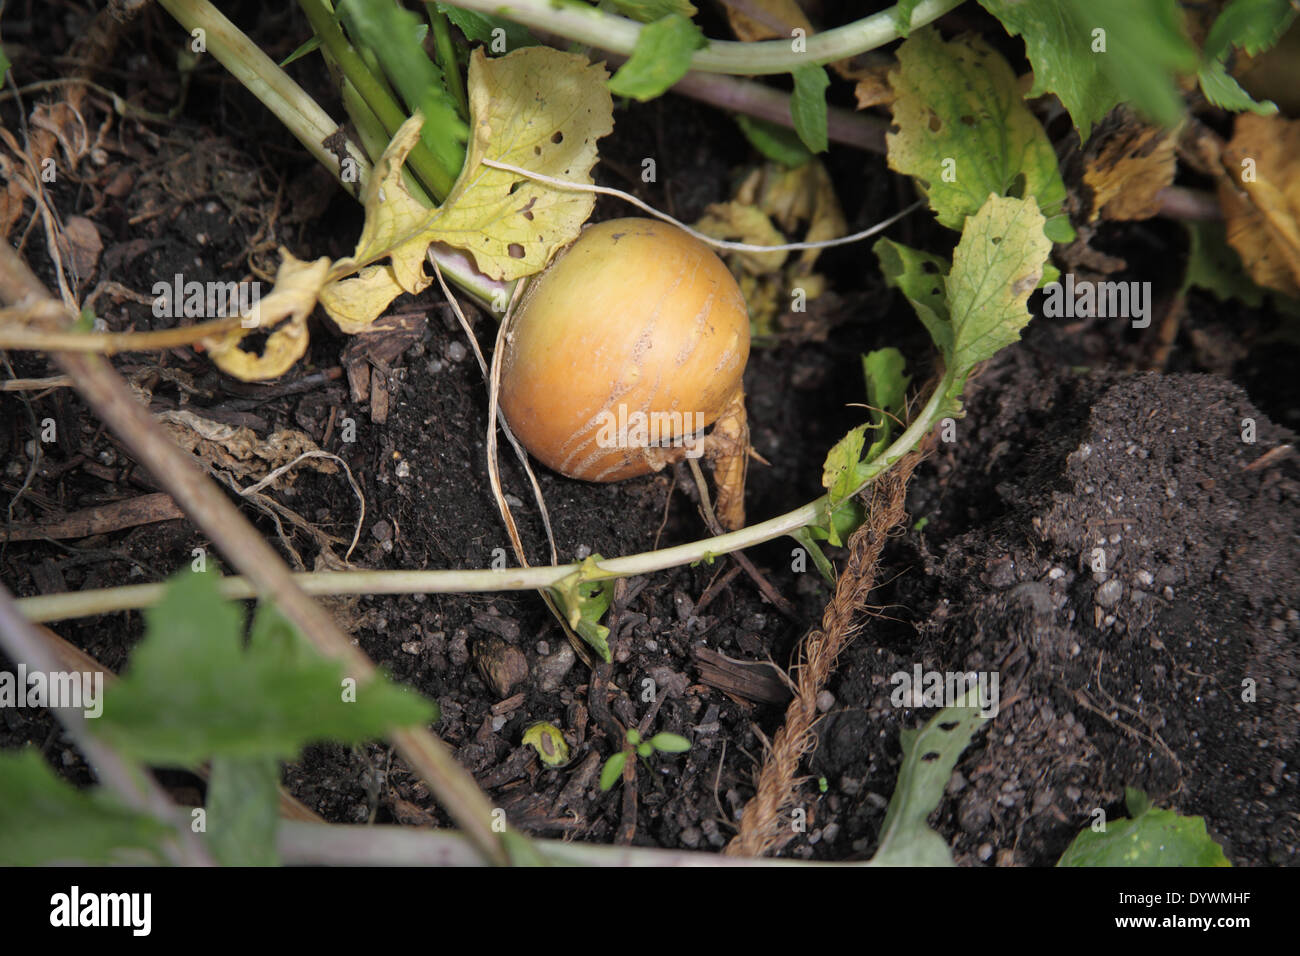 Brassica rapa 'Golden Ball' Turnip close up of mature root Stock Photo